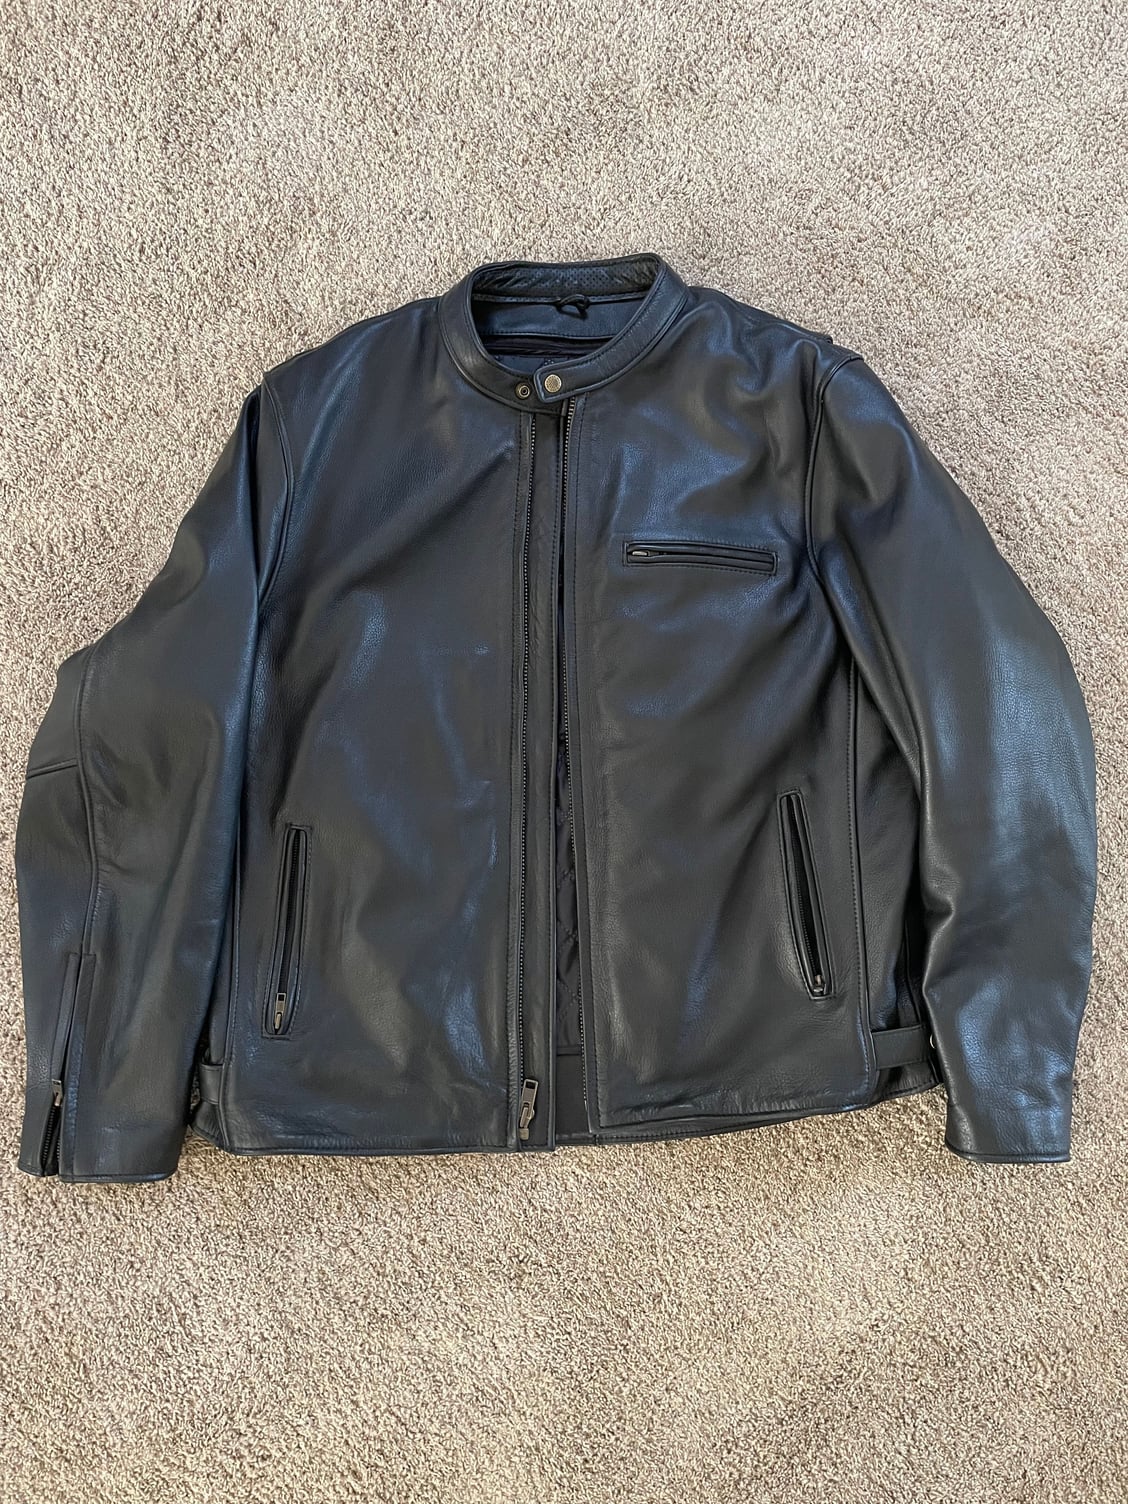 Fox Creek Grayson leather Jacket - Harley Davidson Forums